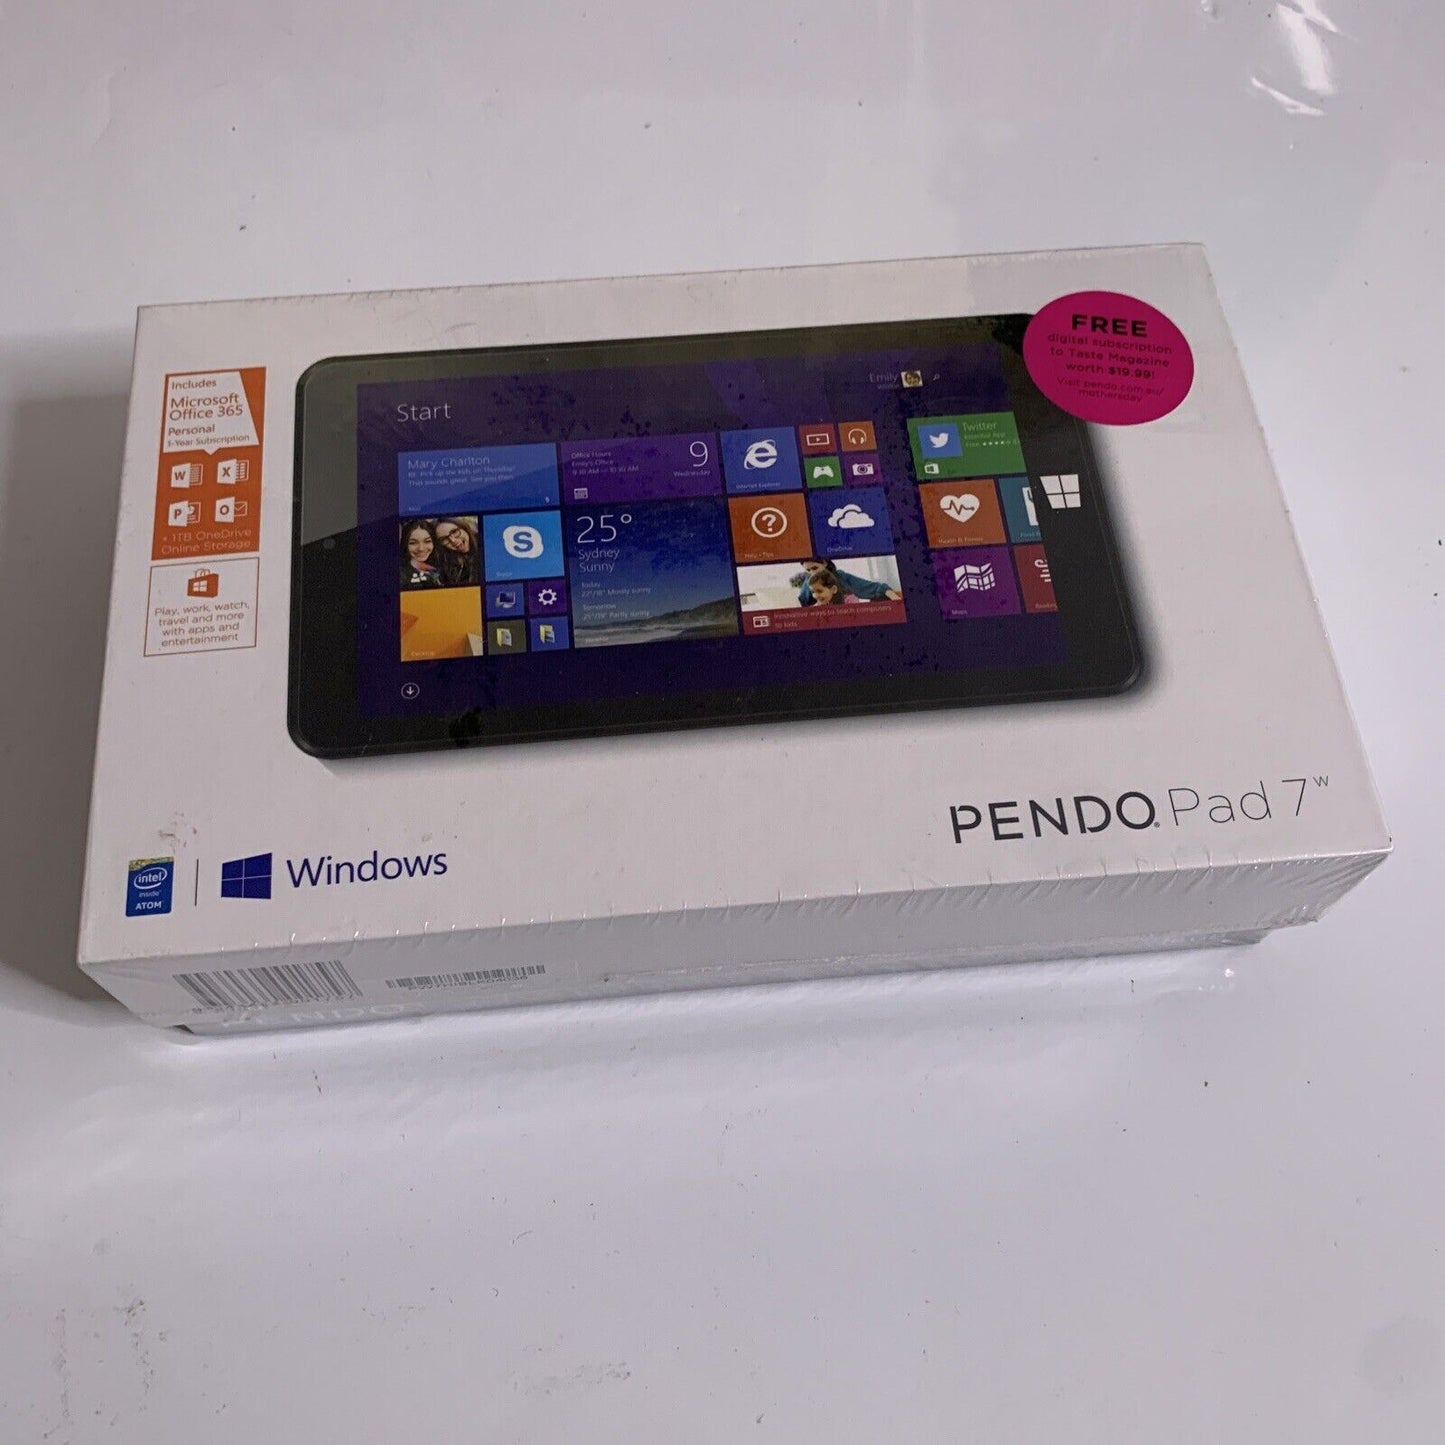 Pendo Pad 7" Windows 8.1 Tablet 16GB NEW